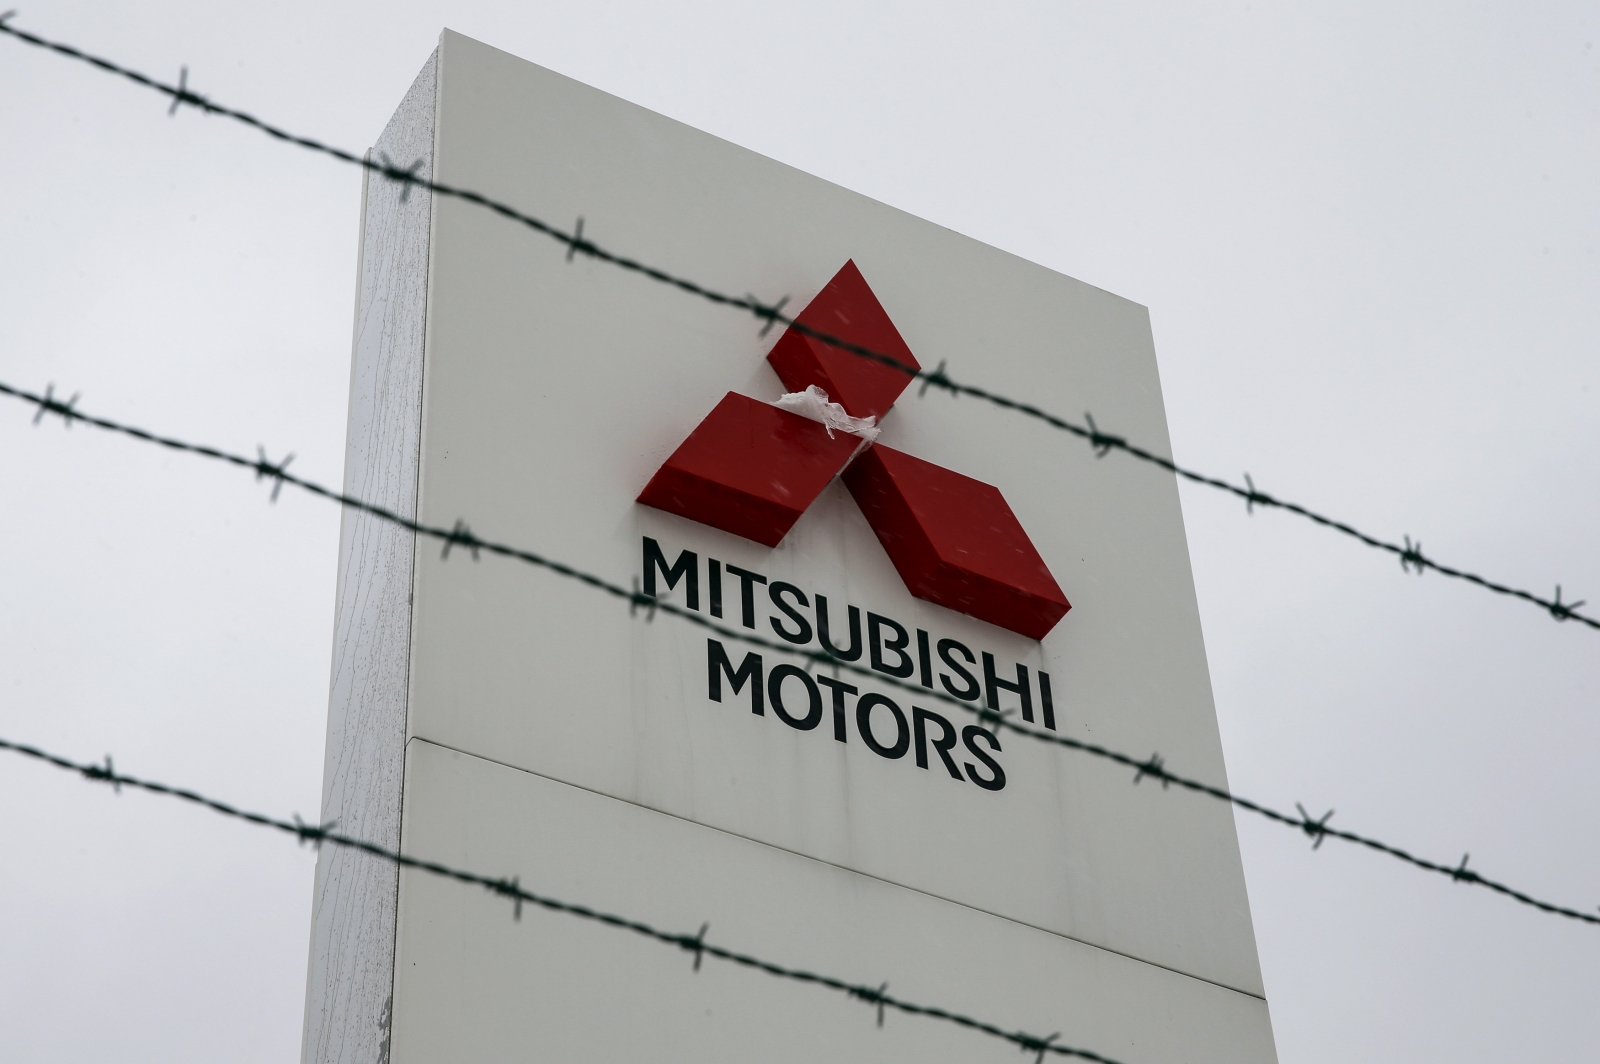 Mitsubishi Motors admit manipulating fuel economy on 600,000 vehicles